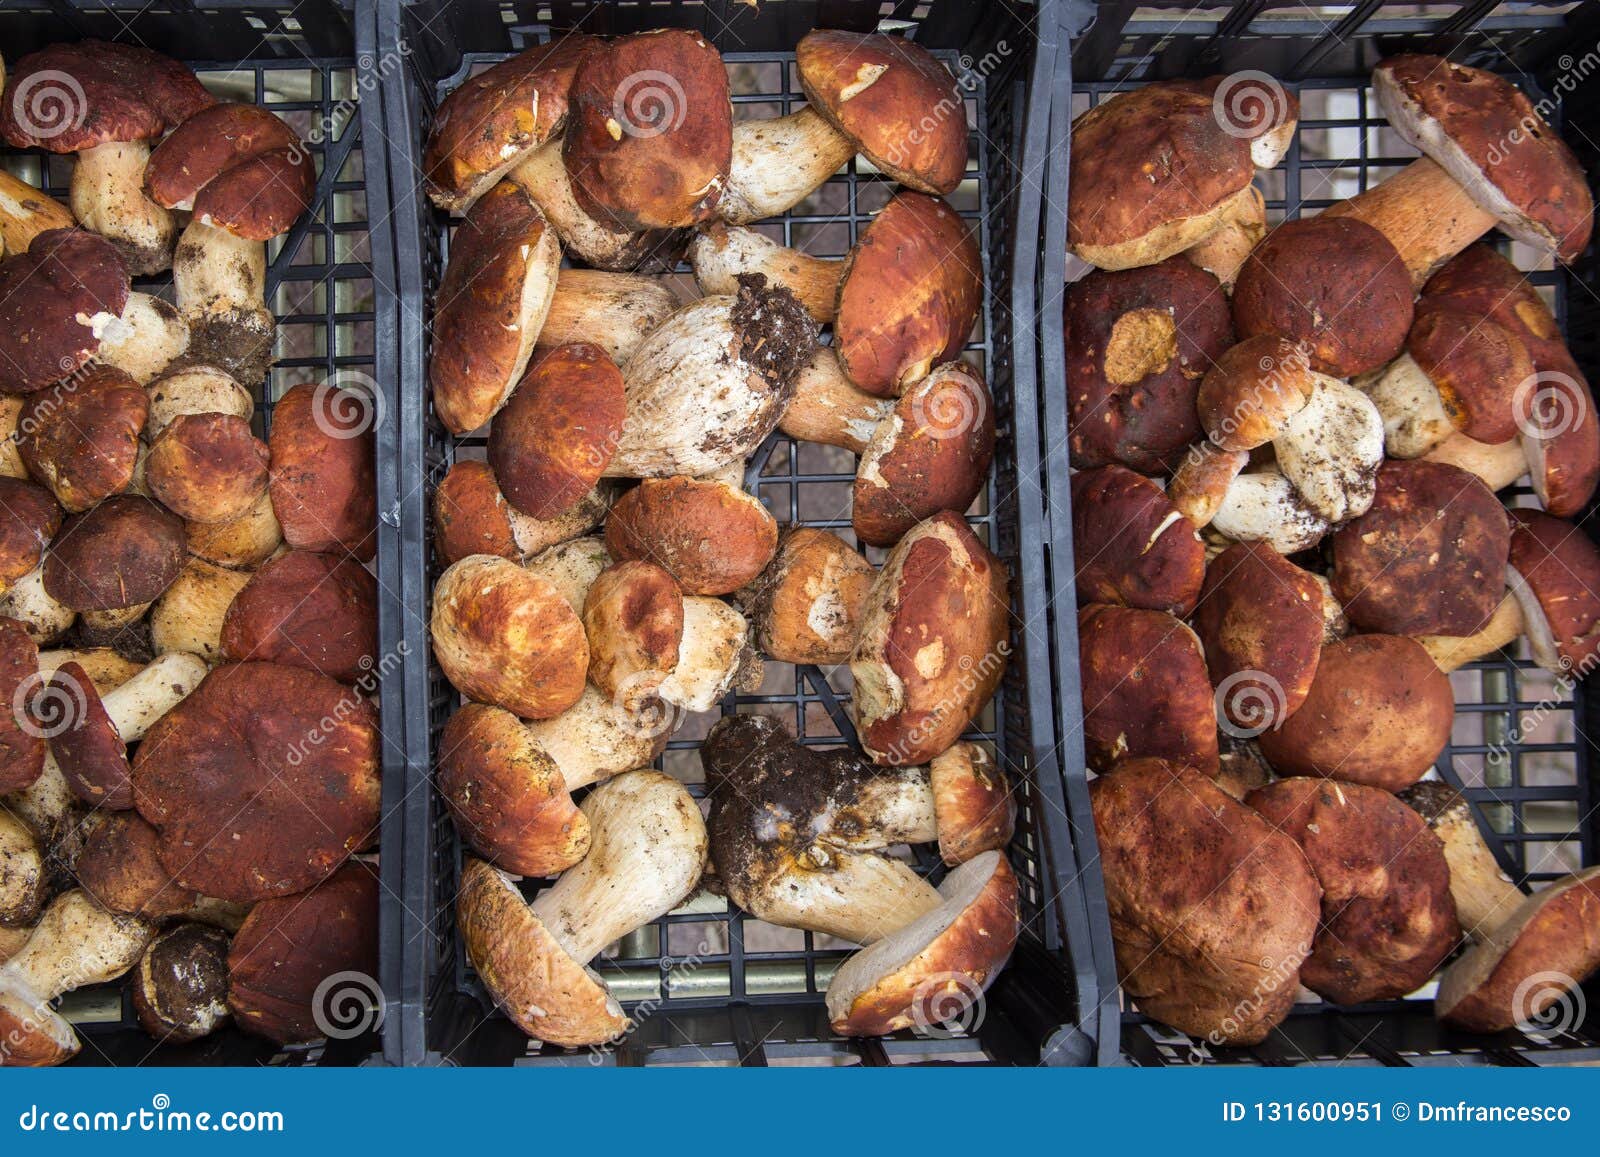 Truffles and Mushrooms Italian Delicacies Italy Europe Stock Image ...